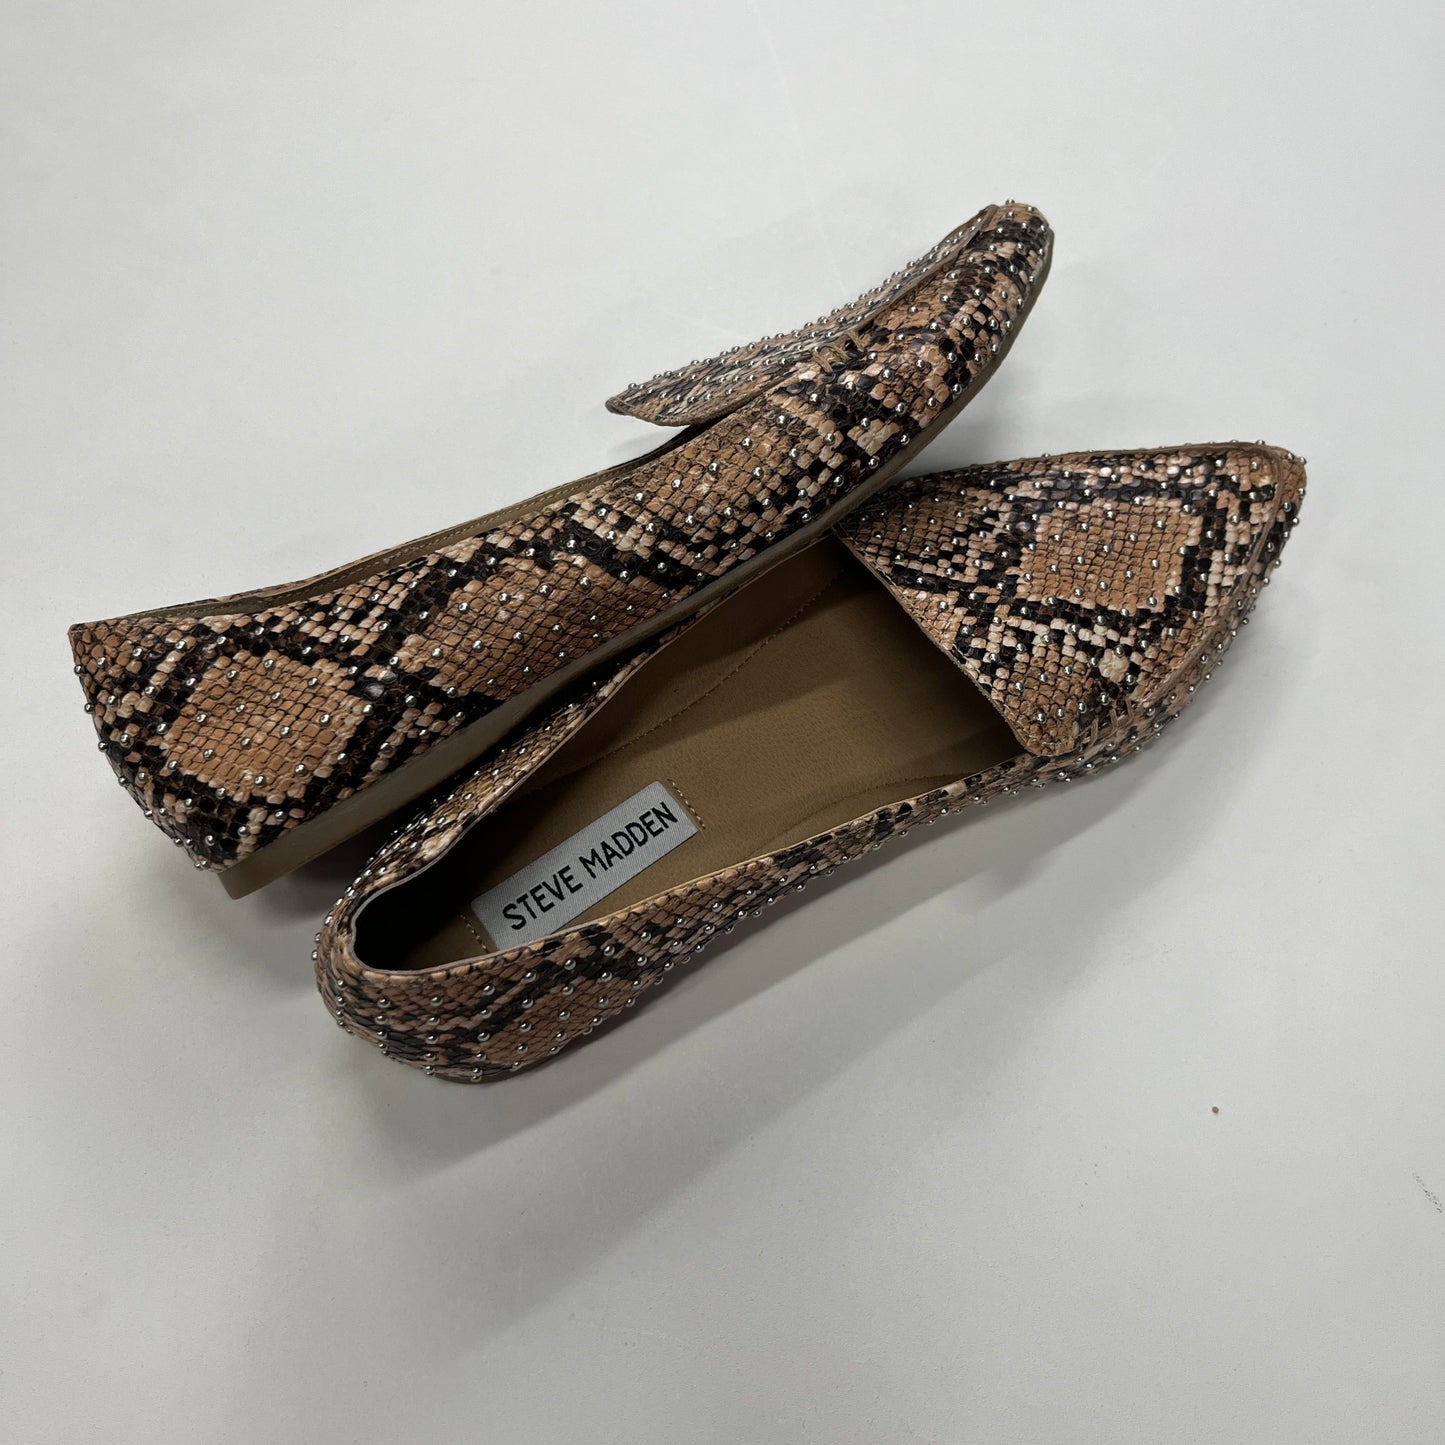 Animal Print Shoes Flats Loafer Oxford Steve Madden, Size 7.5